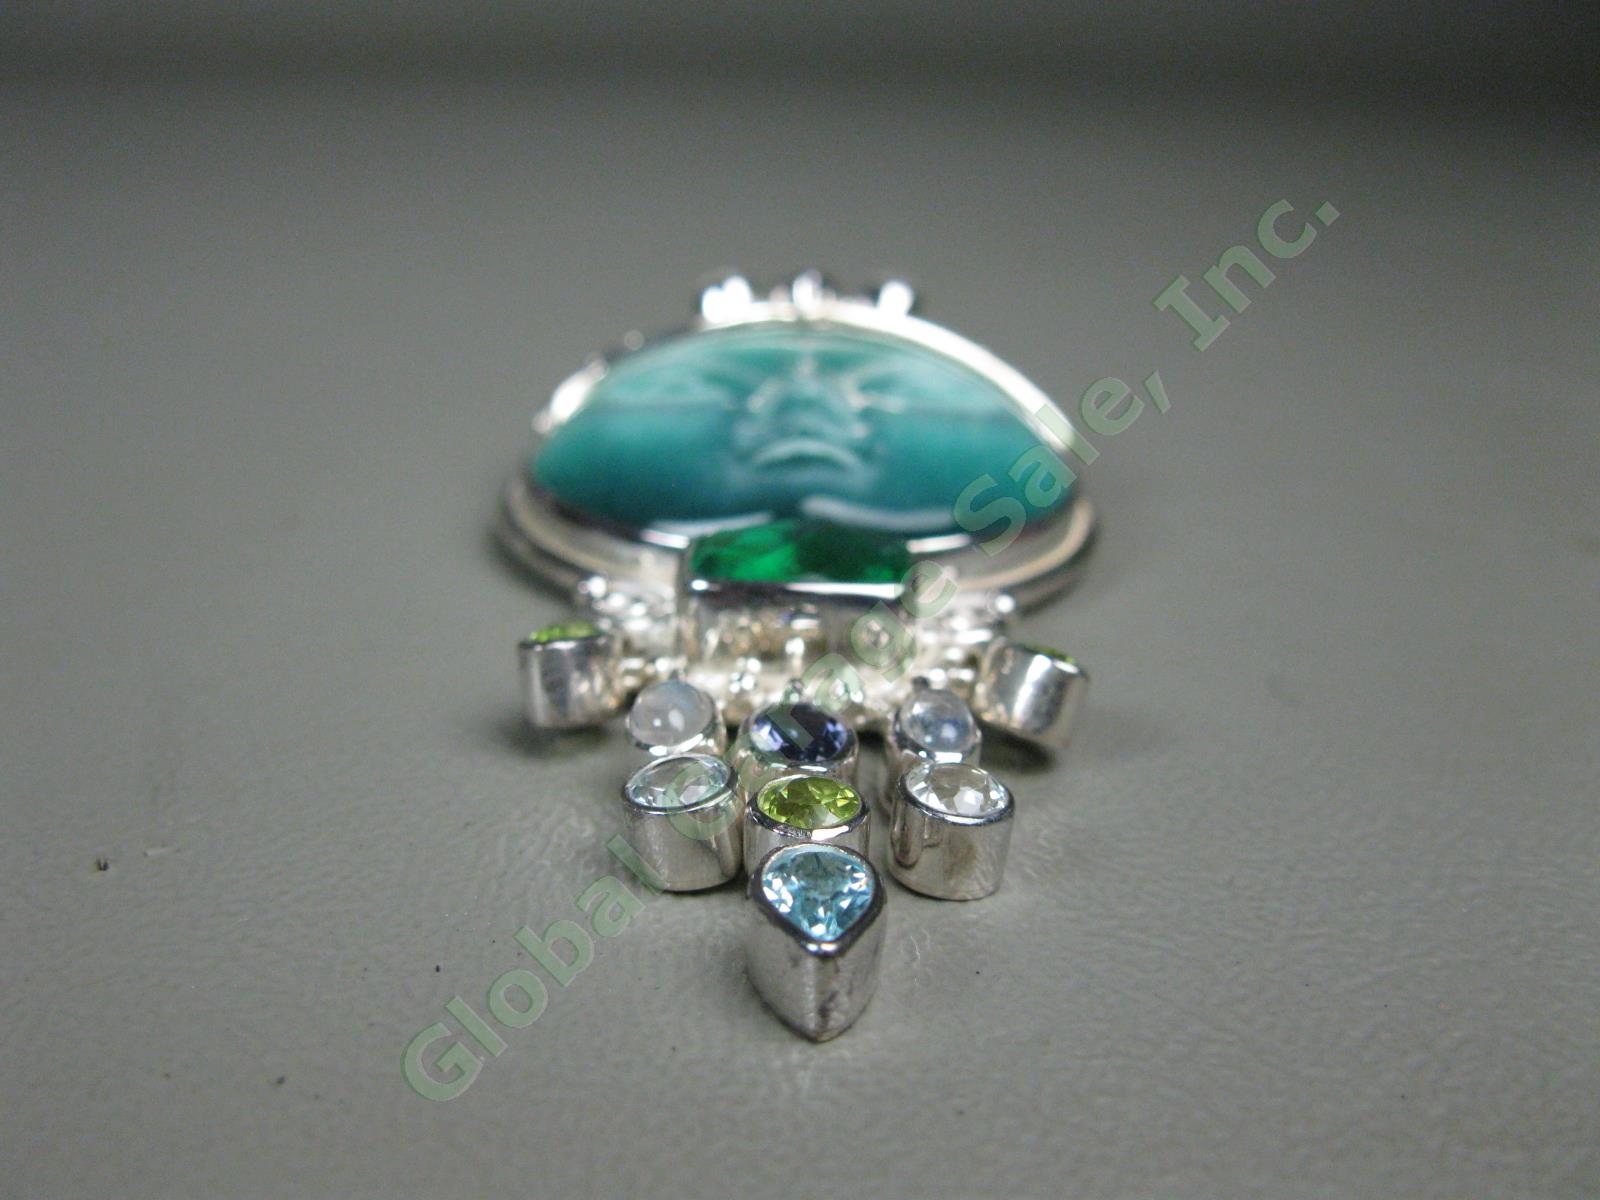 NEW Sajen Goddess Pendant Necklace Large Multi Gemstones Sterling Silver NO RES! 5